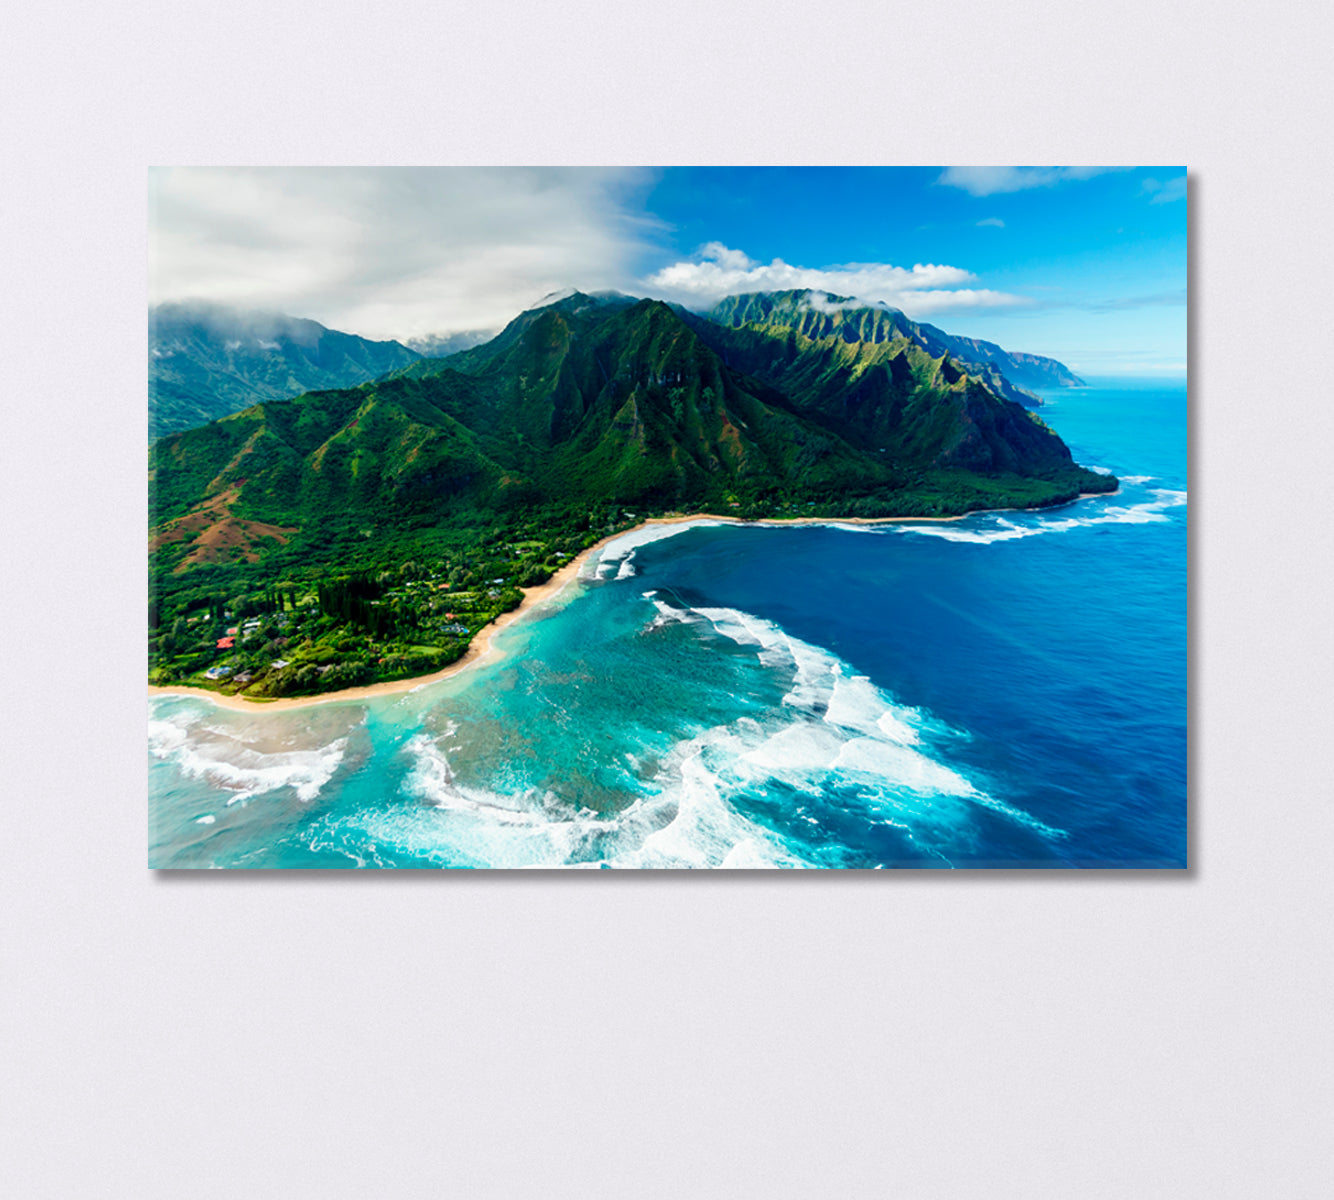 Napali Coast State Wilderness Park Hawaii Canvas Print-Canvas Print-CetArt-1 Panel-24x16 inches-CetArt